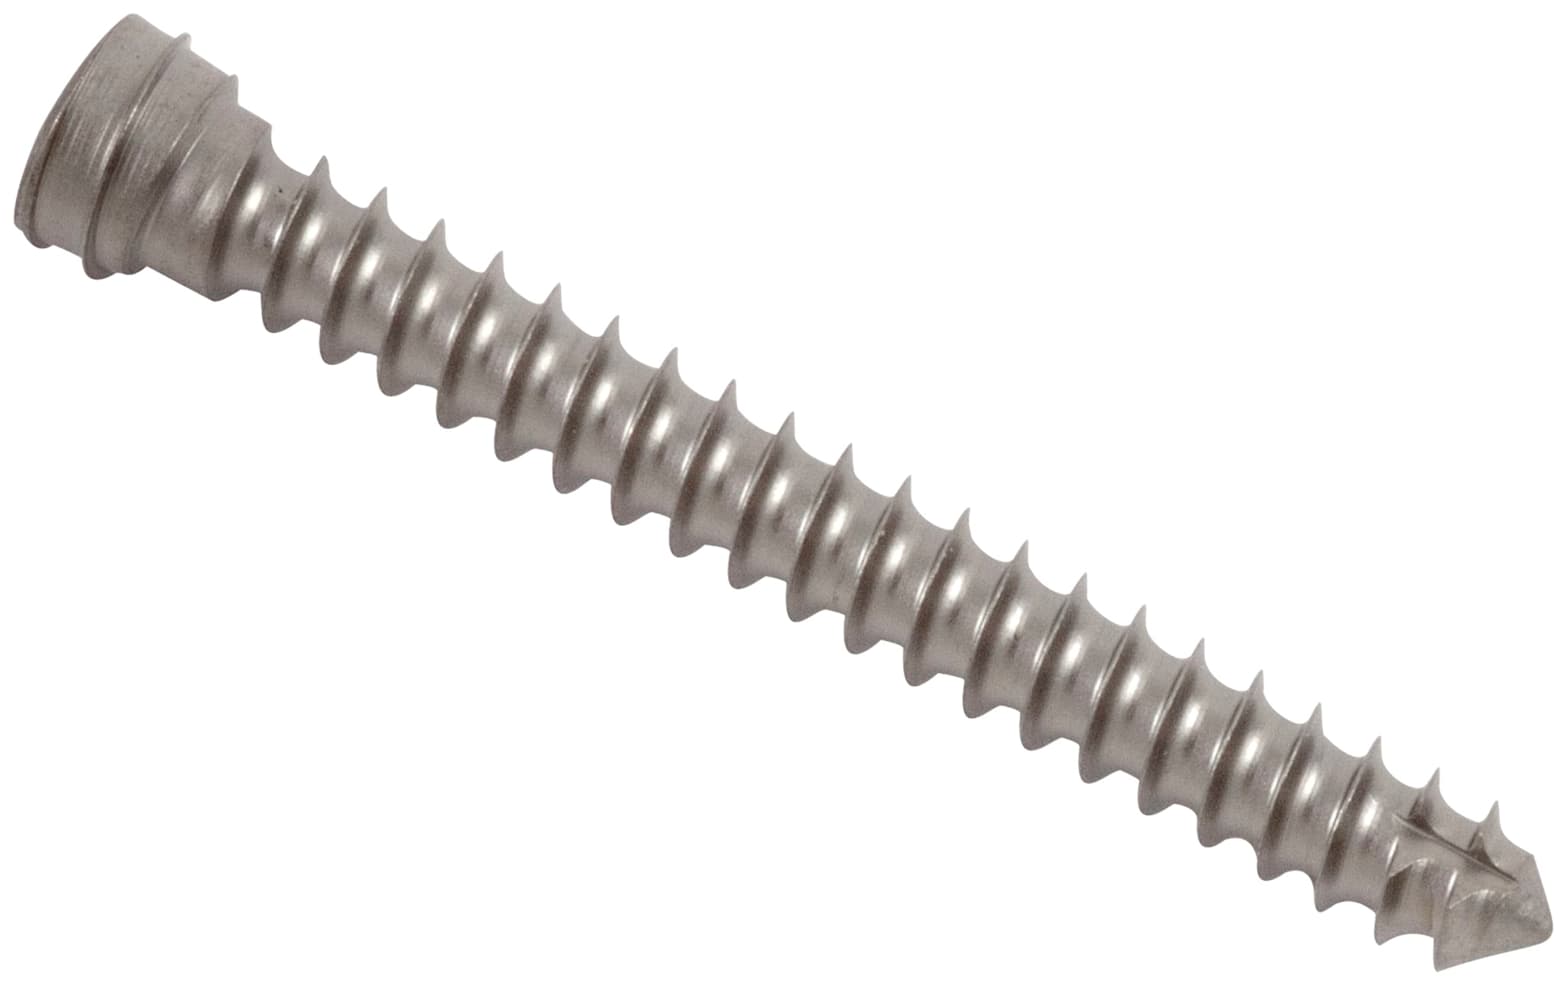 Cortical Locking Screw, 3.5 mm x 32 mm